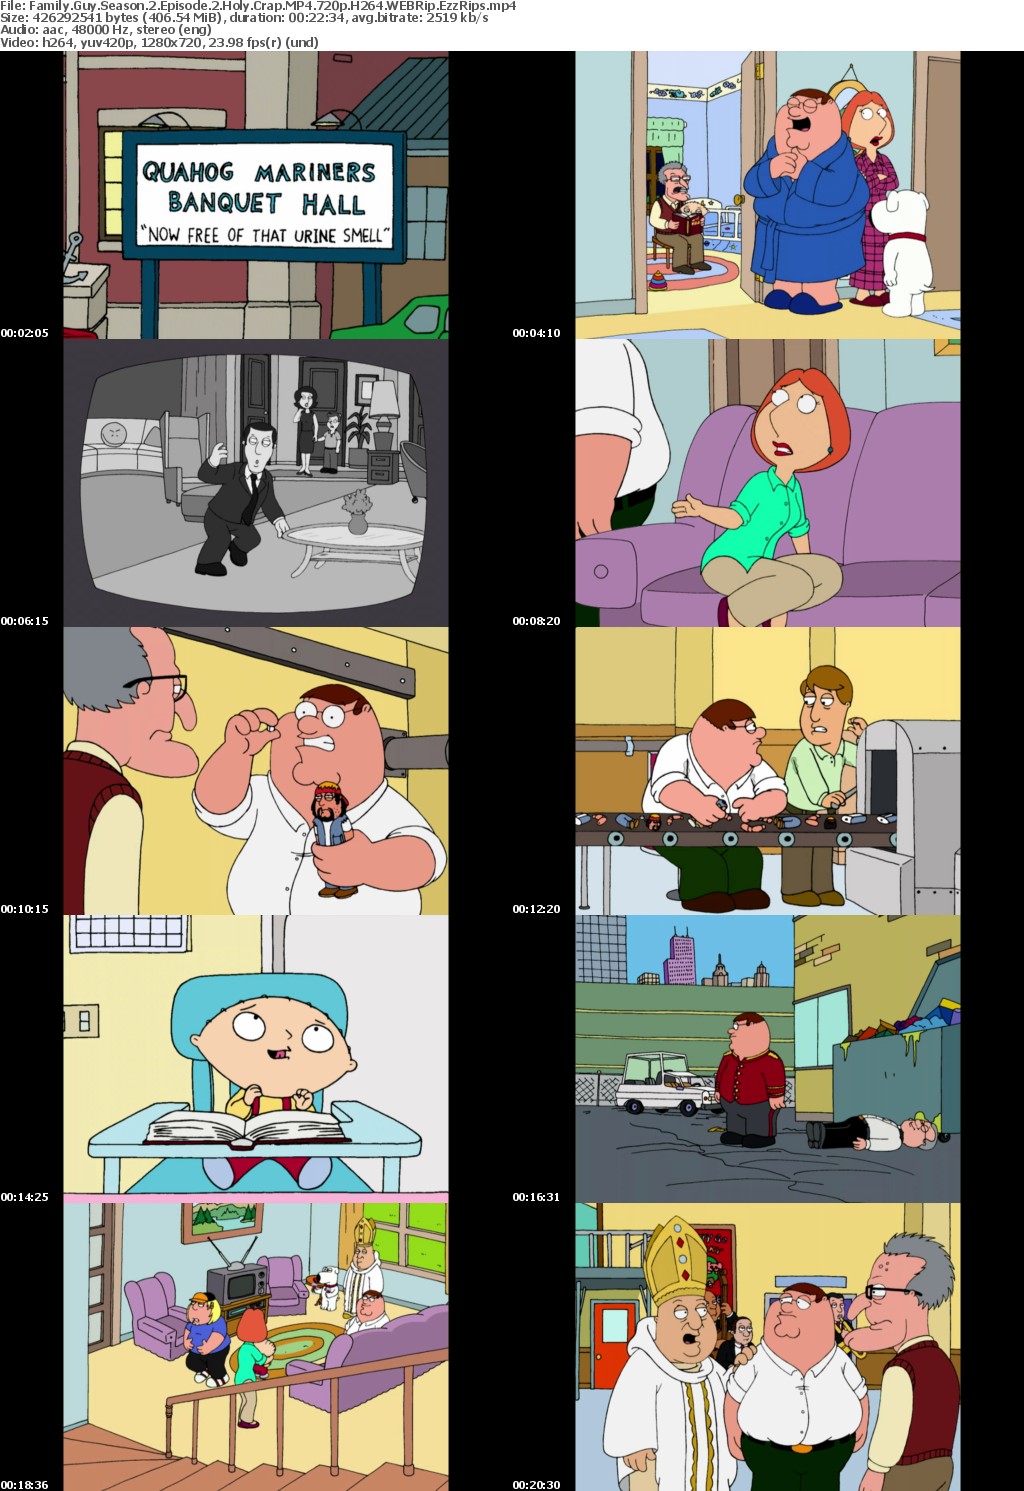 Family Guy Season 2 Episode 2 Holy Crap MP4 720p H264 WEBRip EzzRips